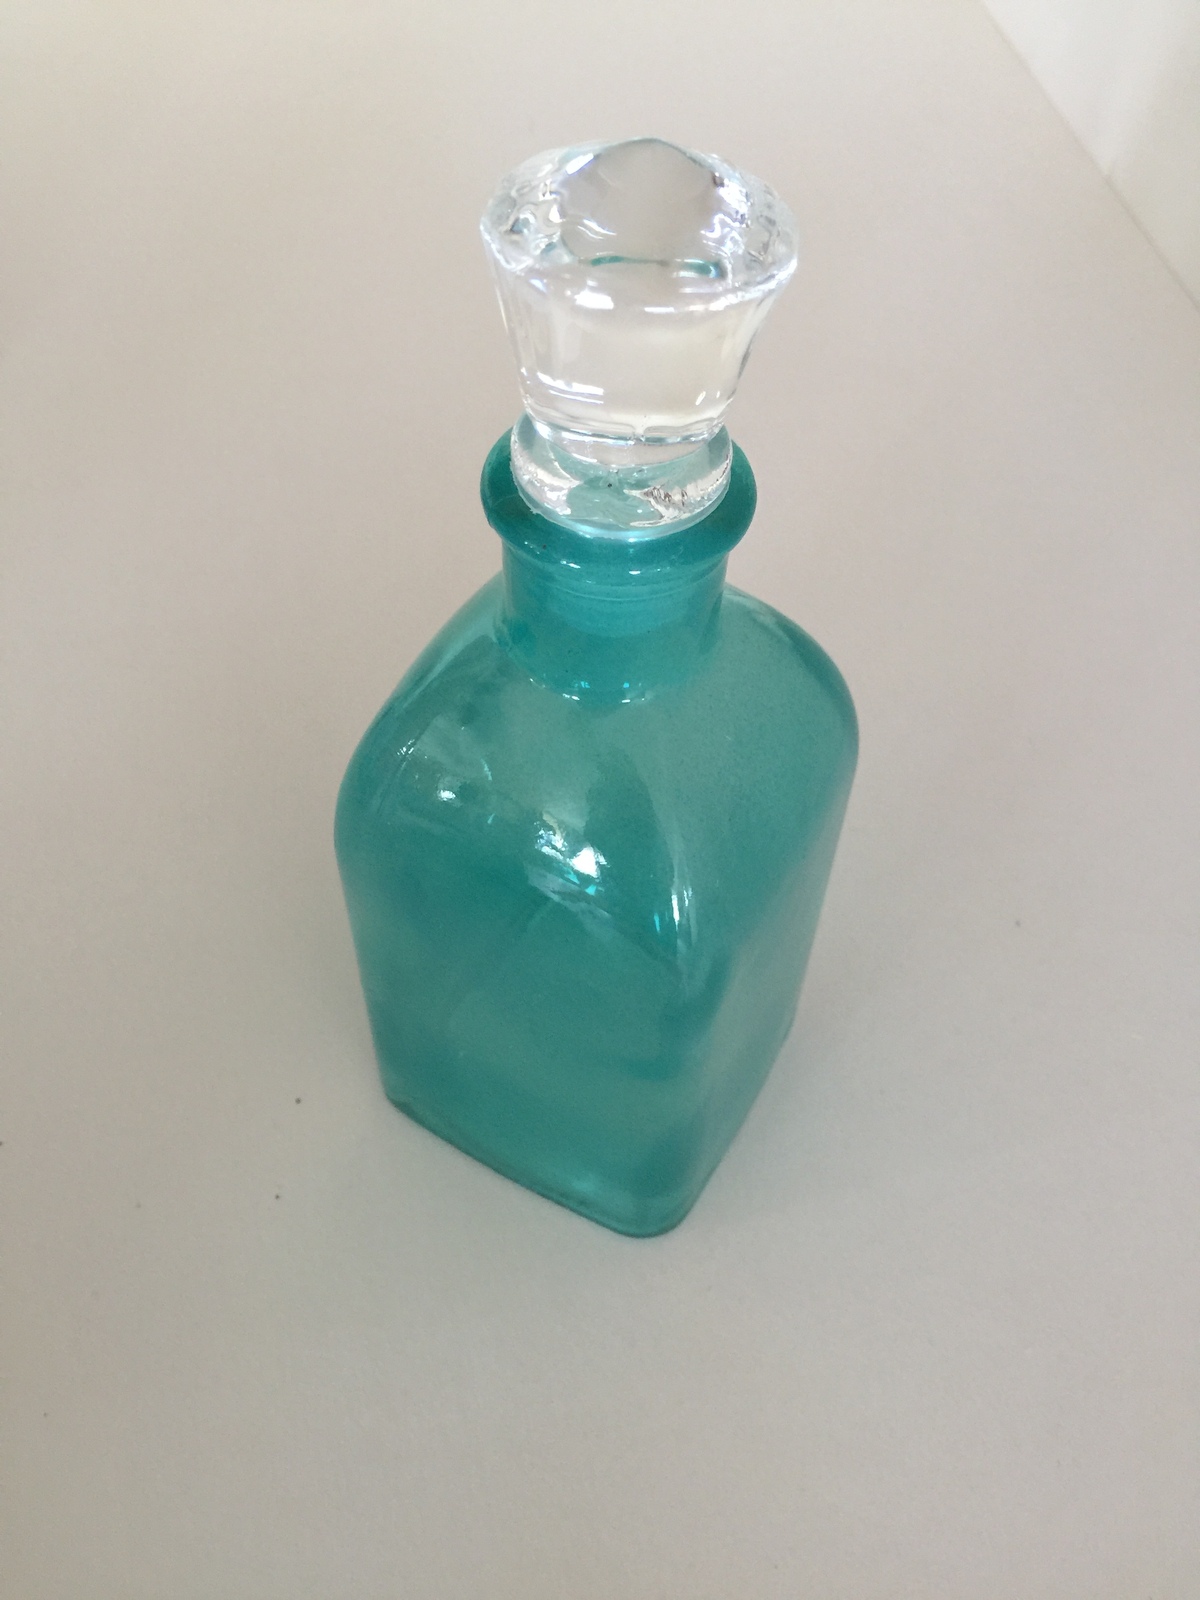 Seafoam Green Glass Bottle With Topper - $36.99